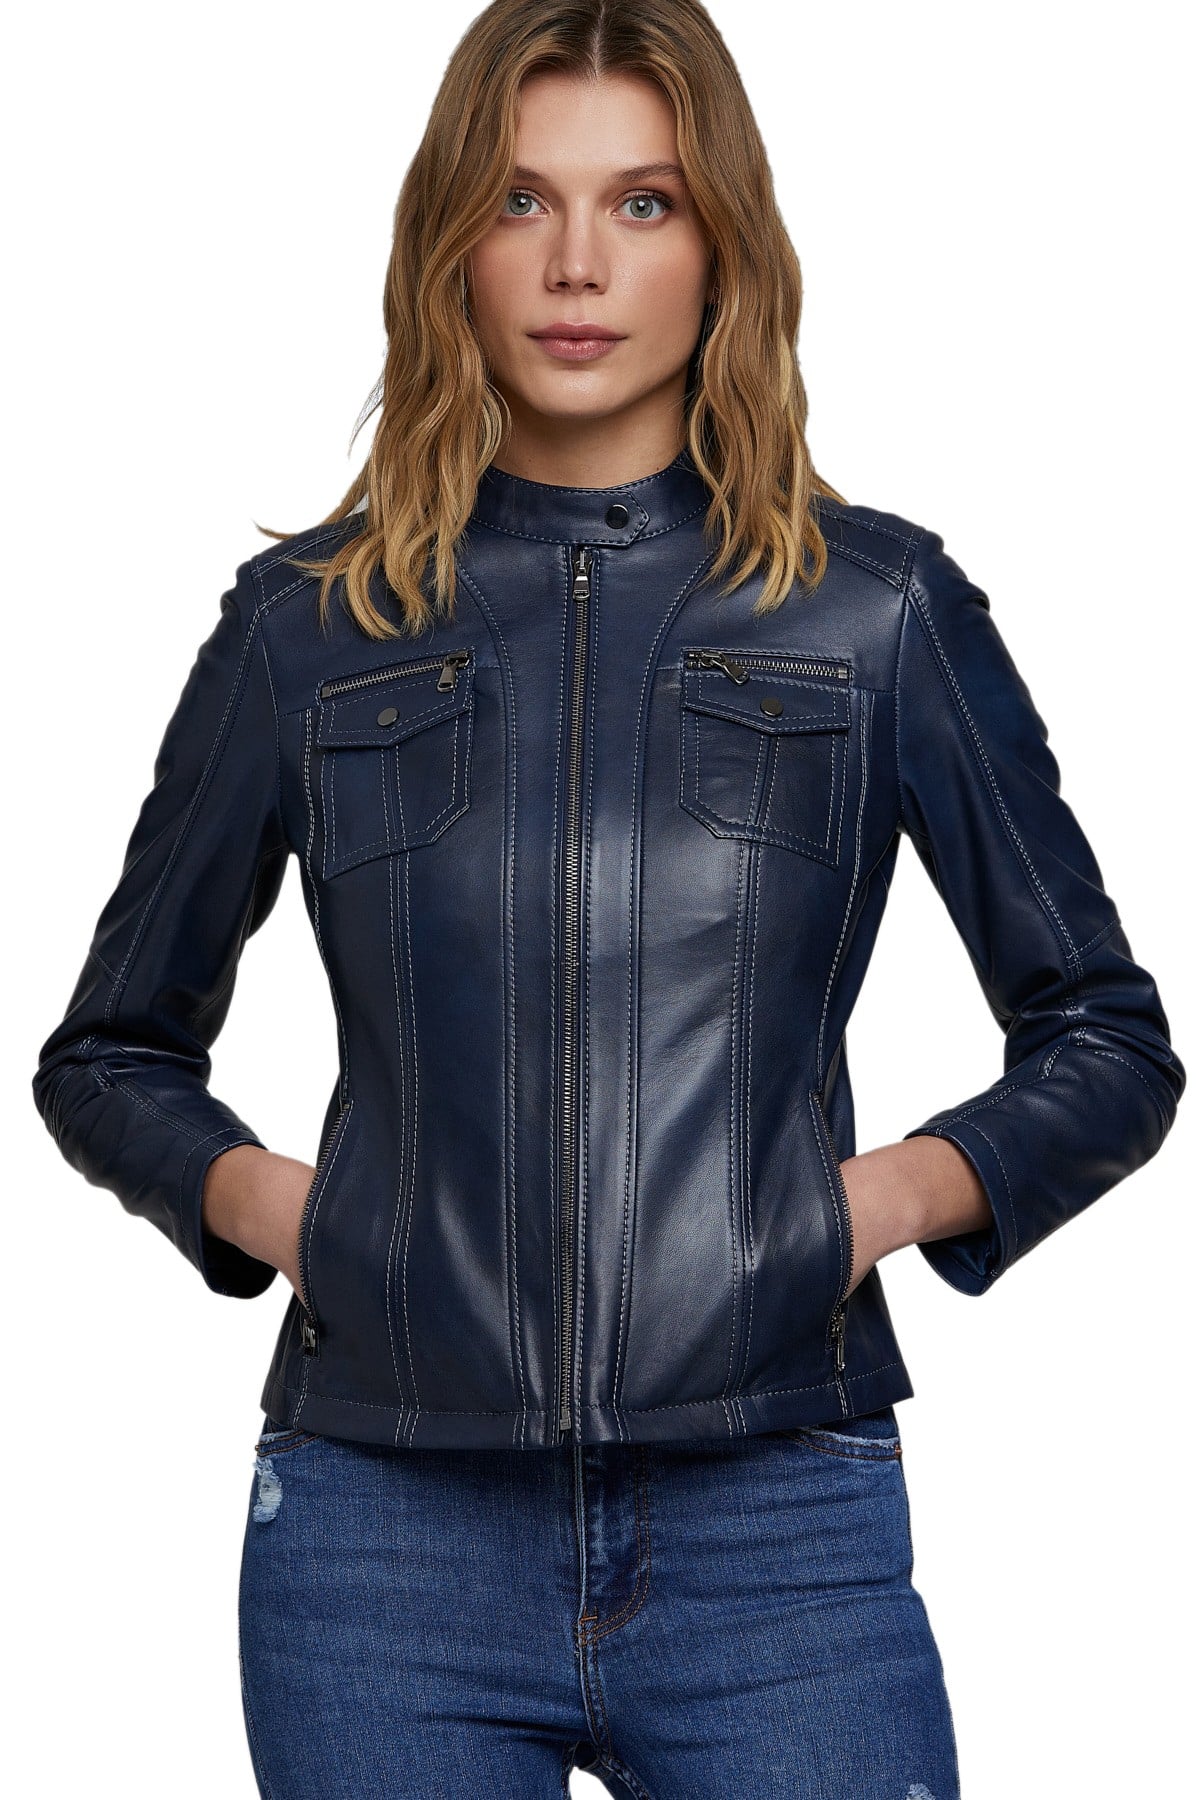 Ladies Real Leather Jacket Blue Fashion Stylish Biker Style Top Rock Jacket 9213 